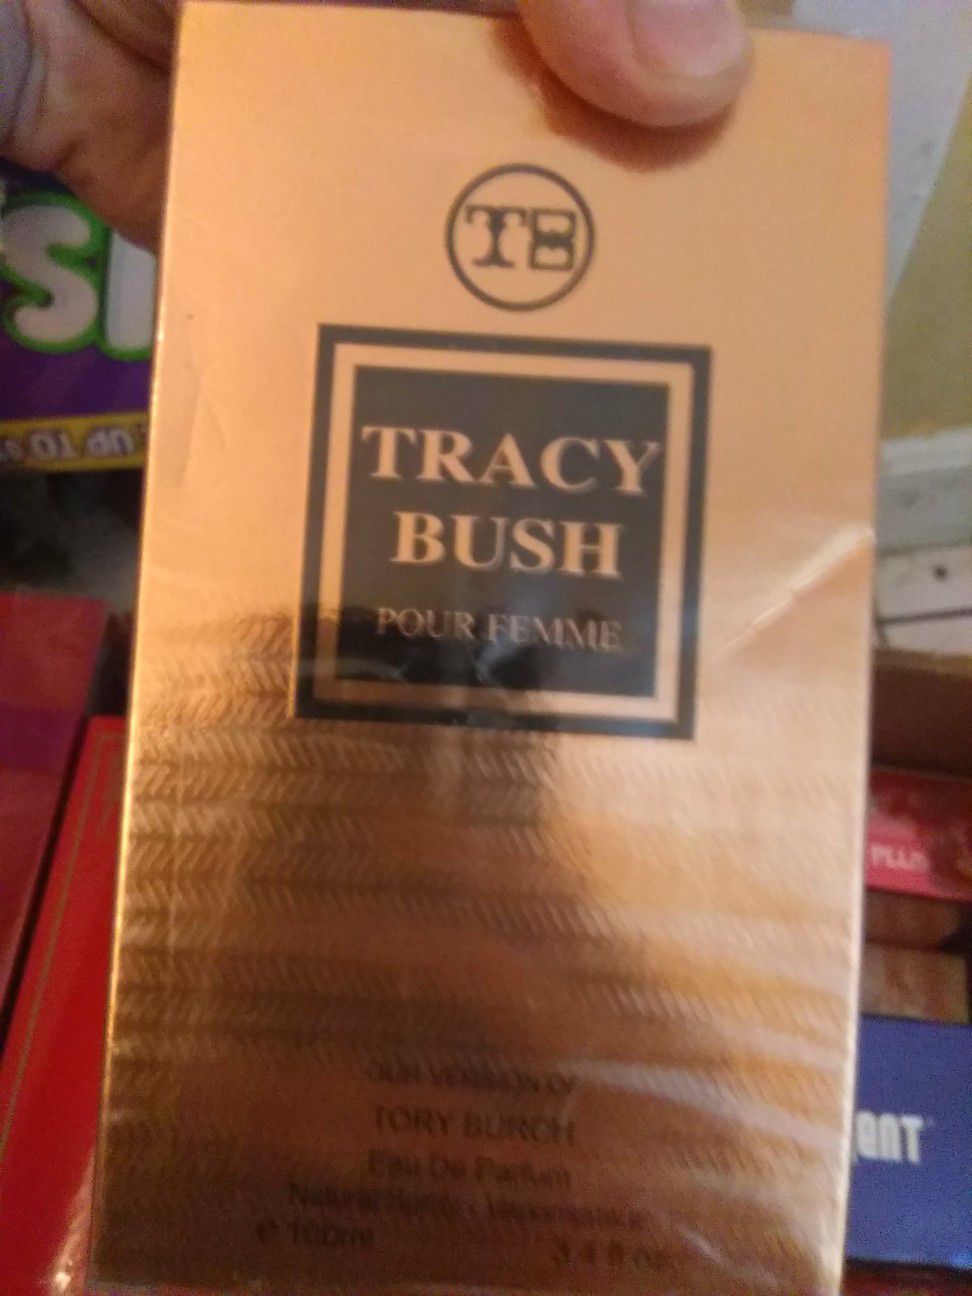 Tracy bush perfume